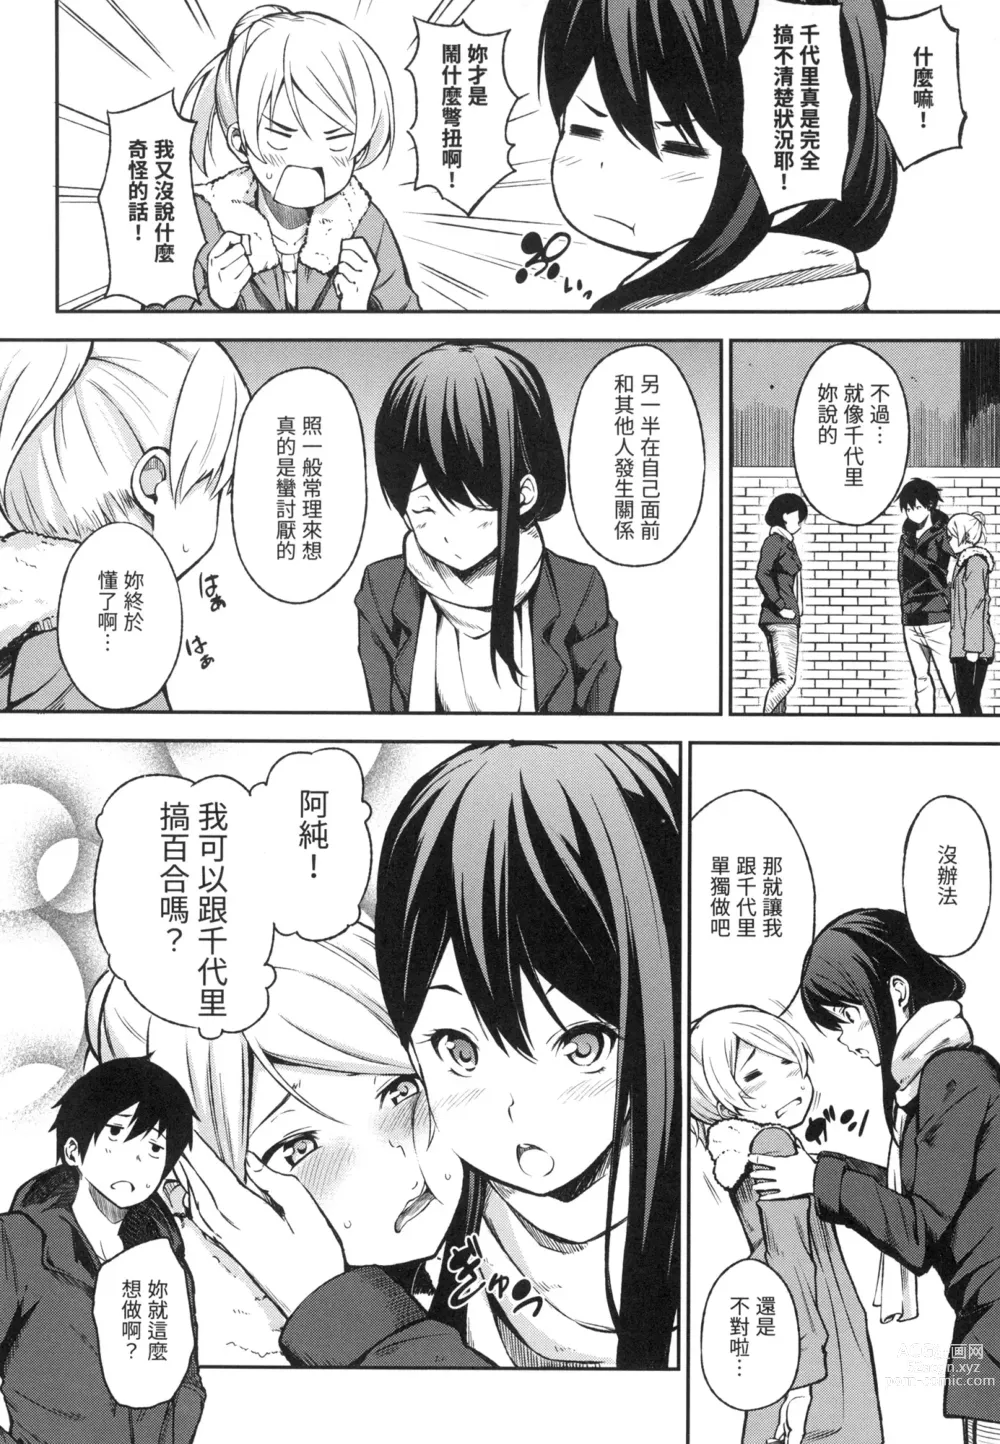 Page 201 of manga 點心時間 (decensored)